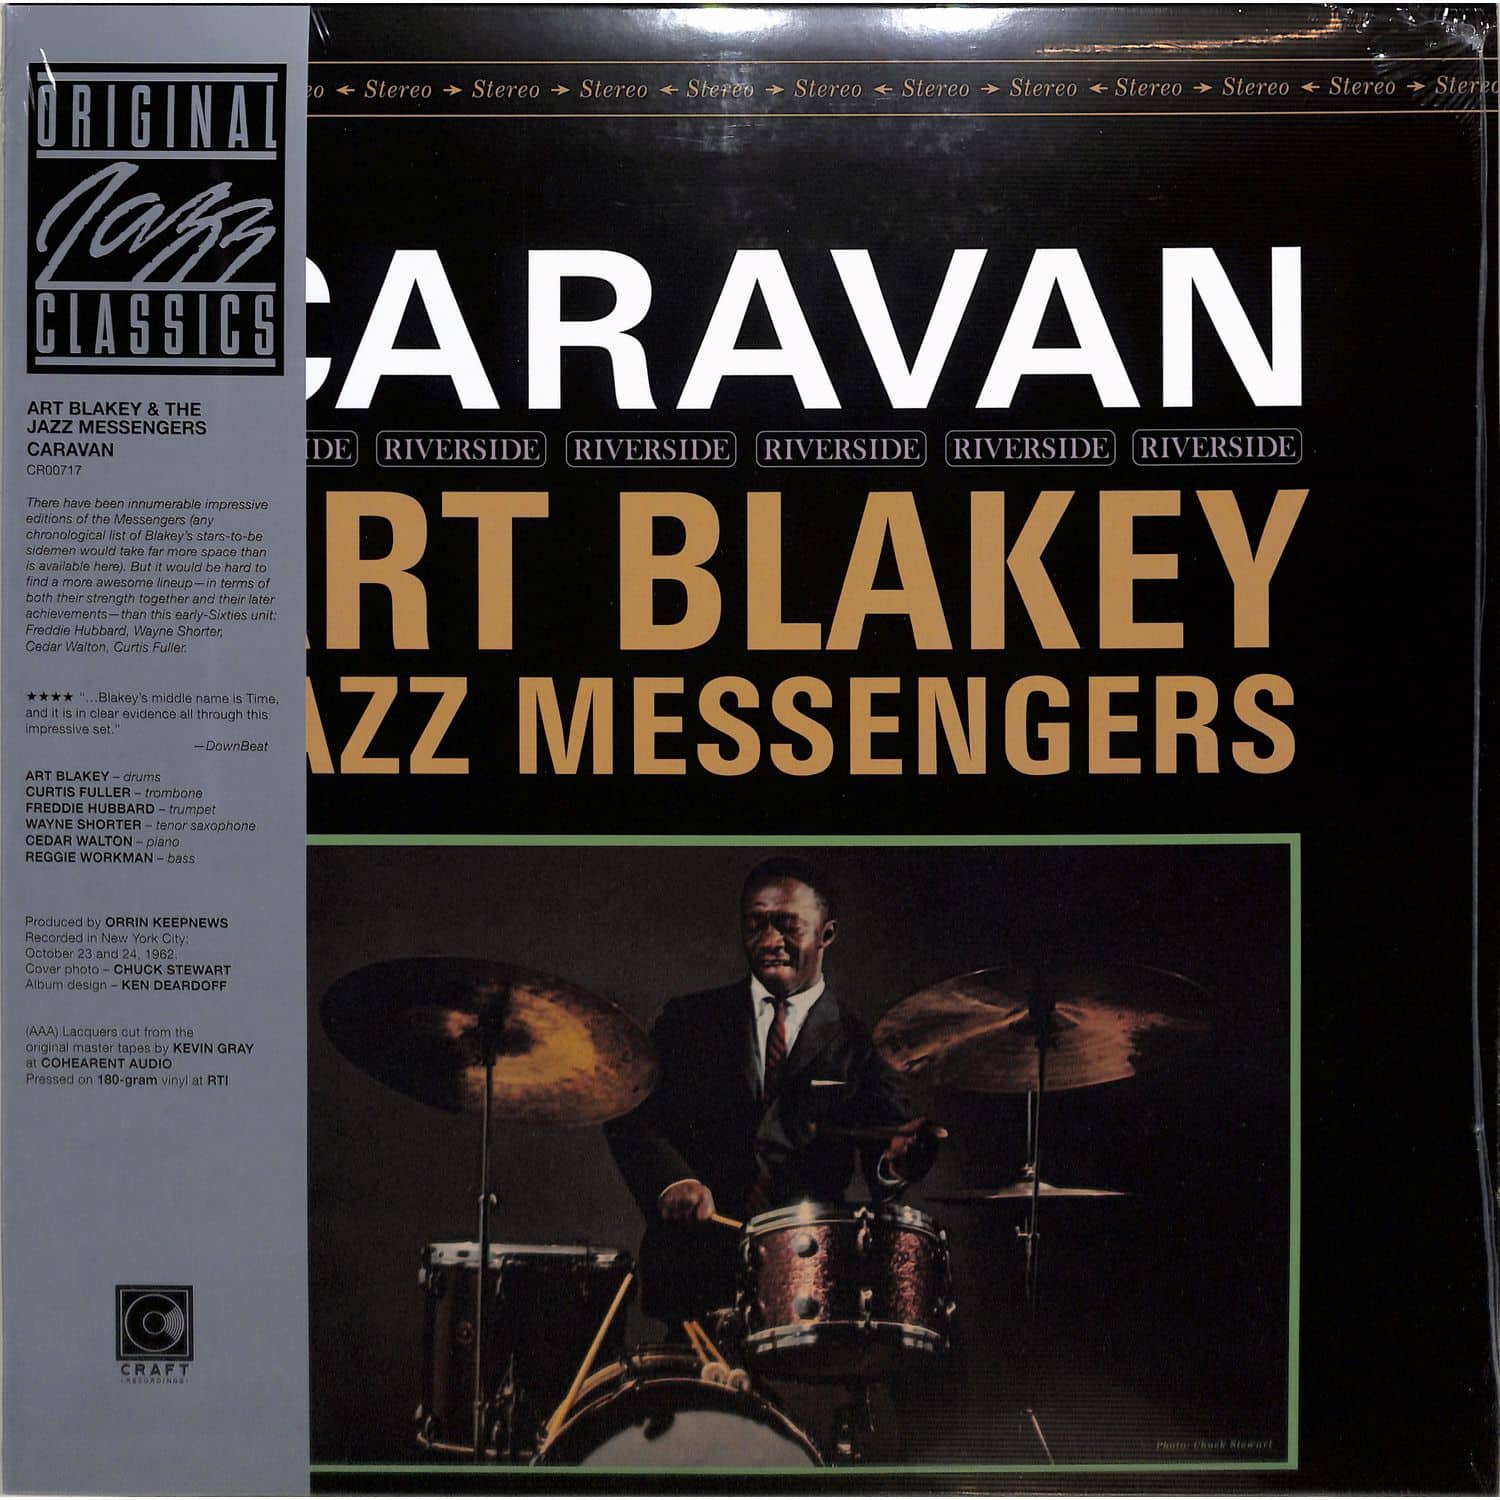 Art Blakey & the Jazz Messengers - CARAVAN 